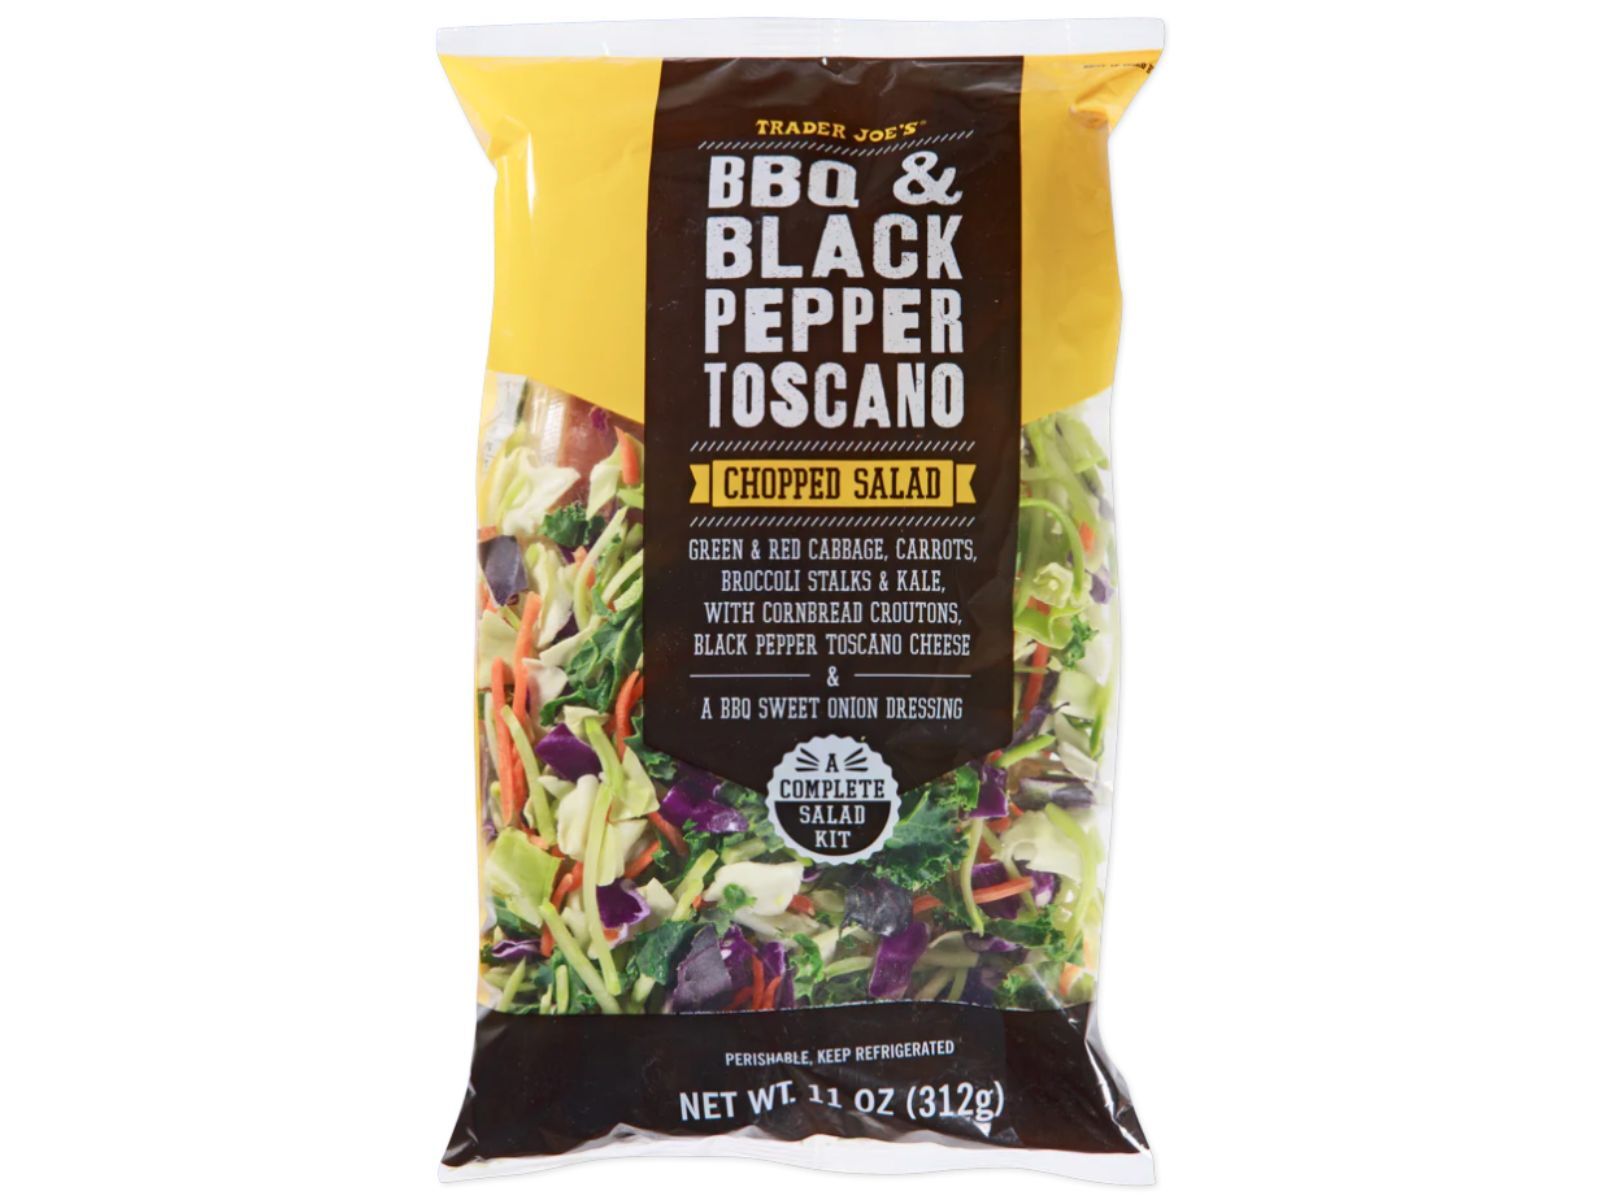 Trader Joe's salad kits: BBQ and Black Pepper Toscano salad kit